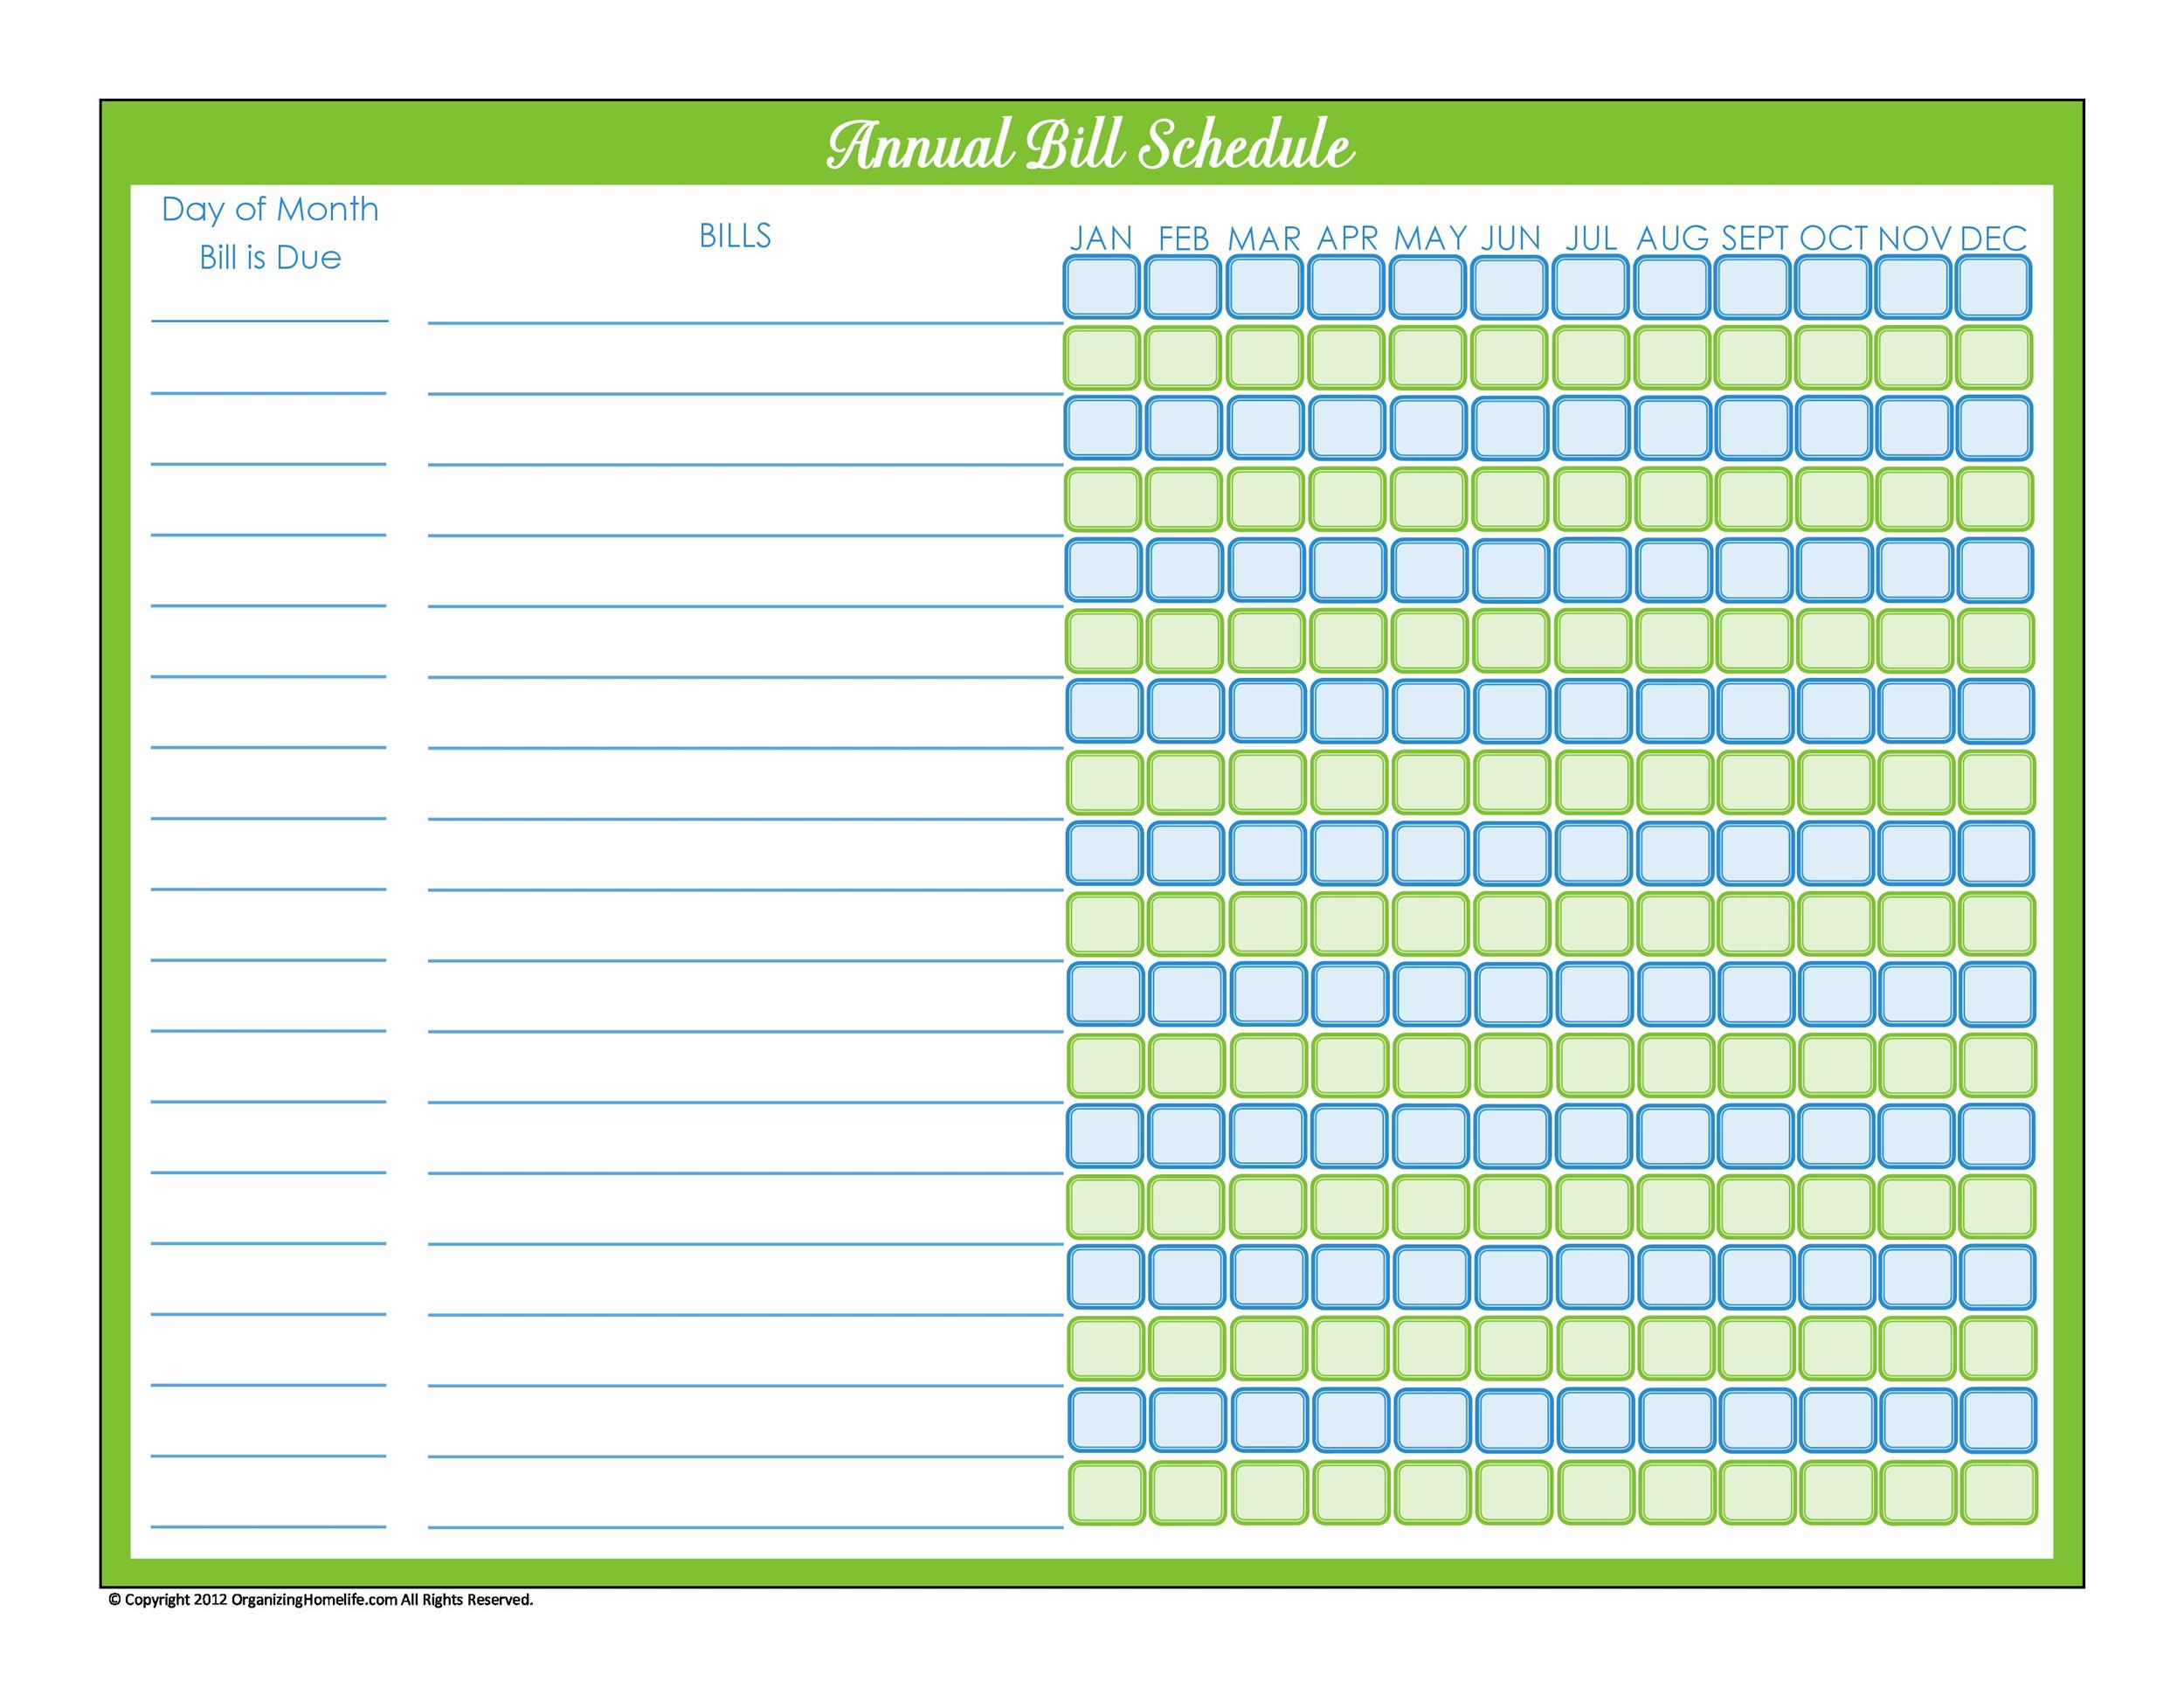 Bill-Pay-Checklist-Template